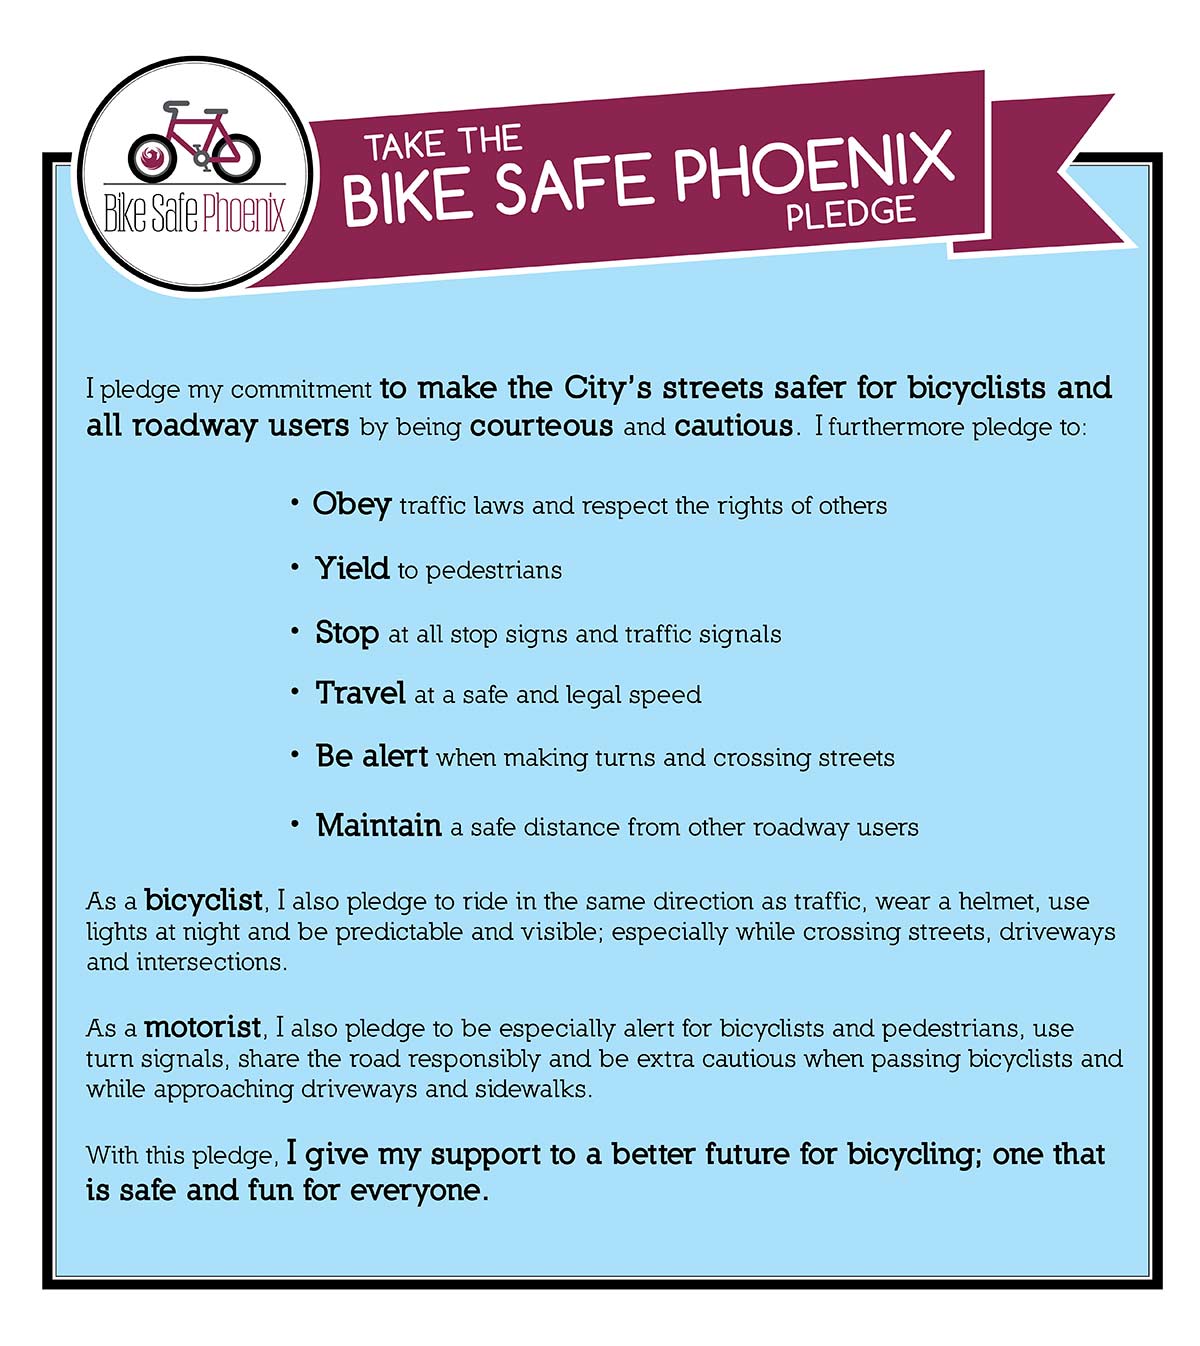 Bicycle Safety pledge illustration